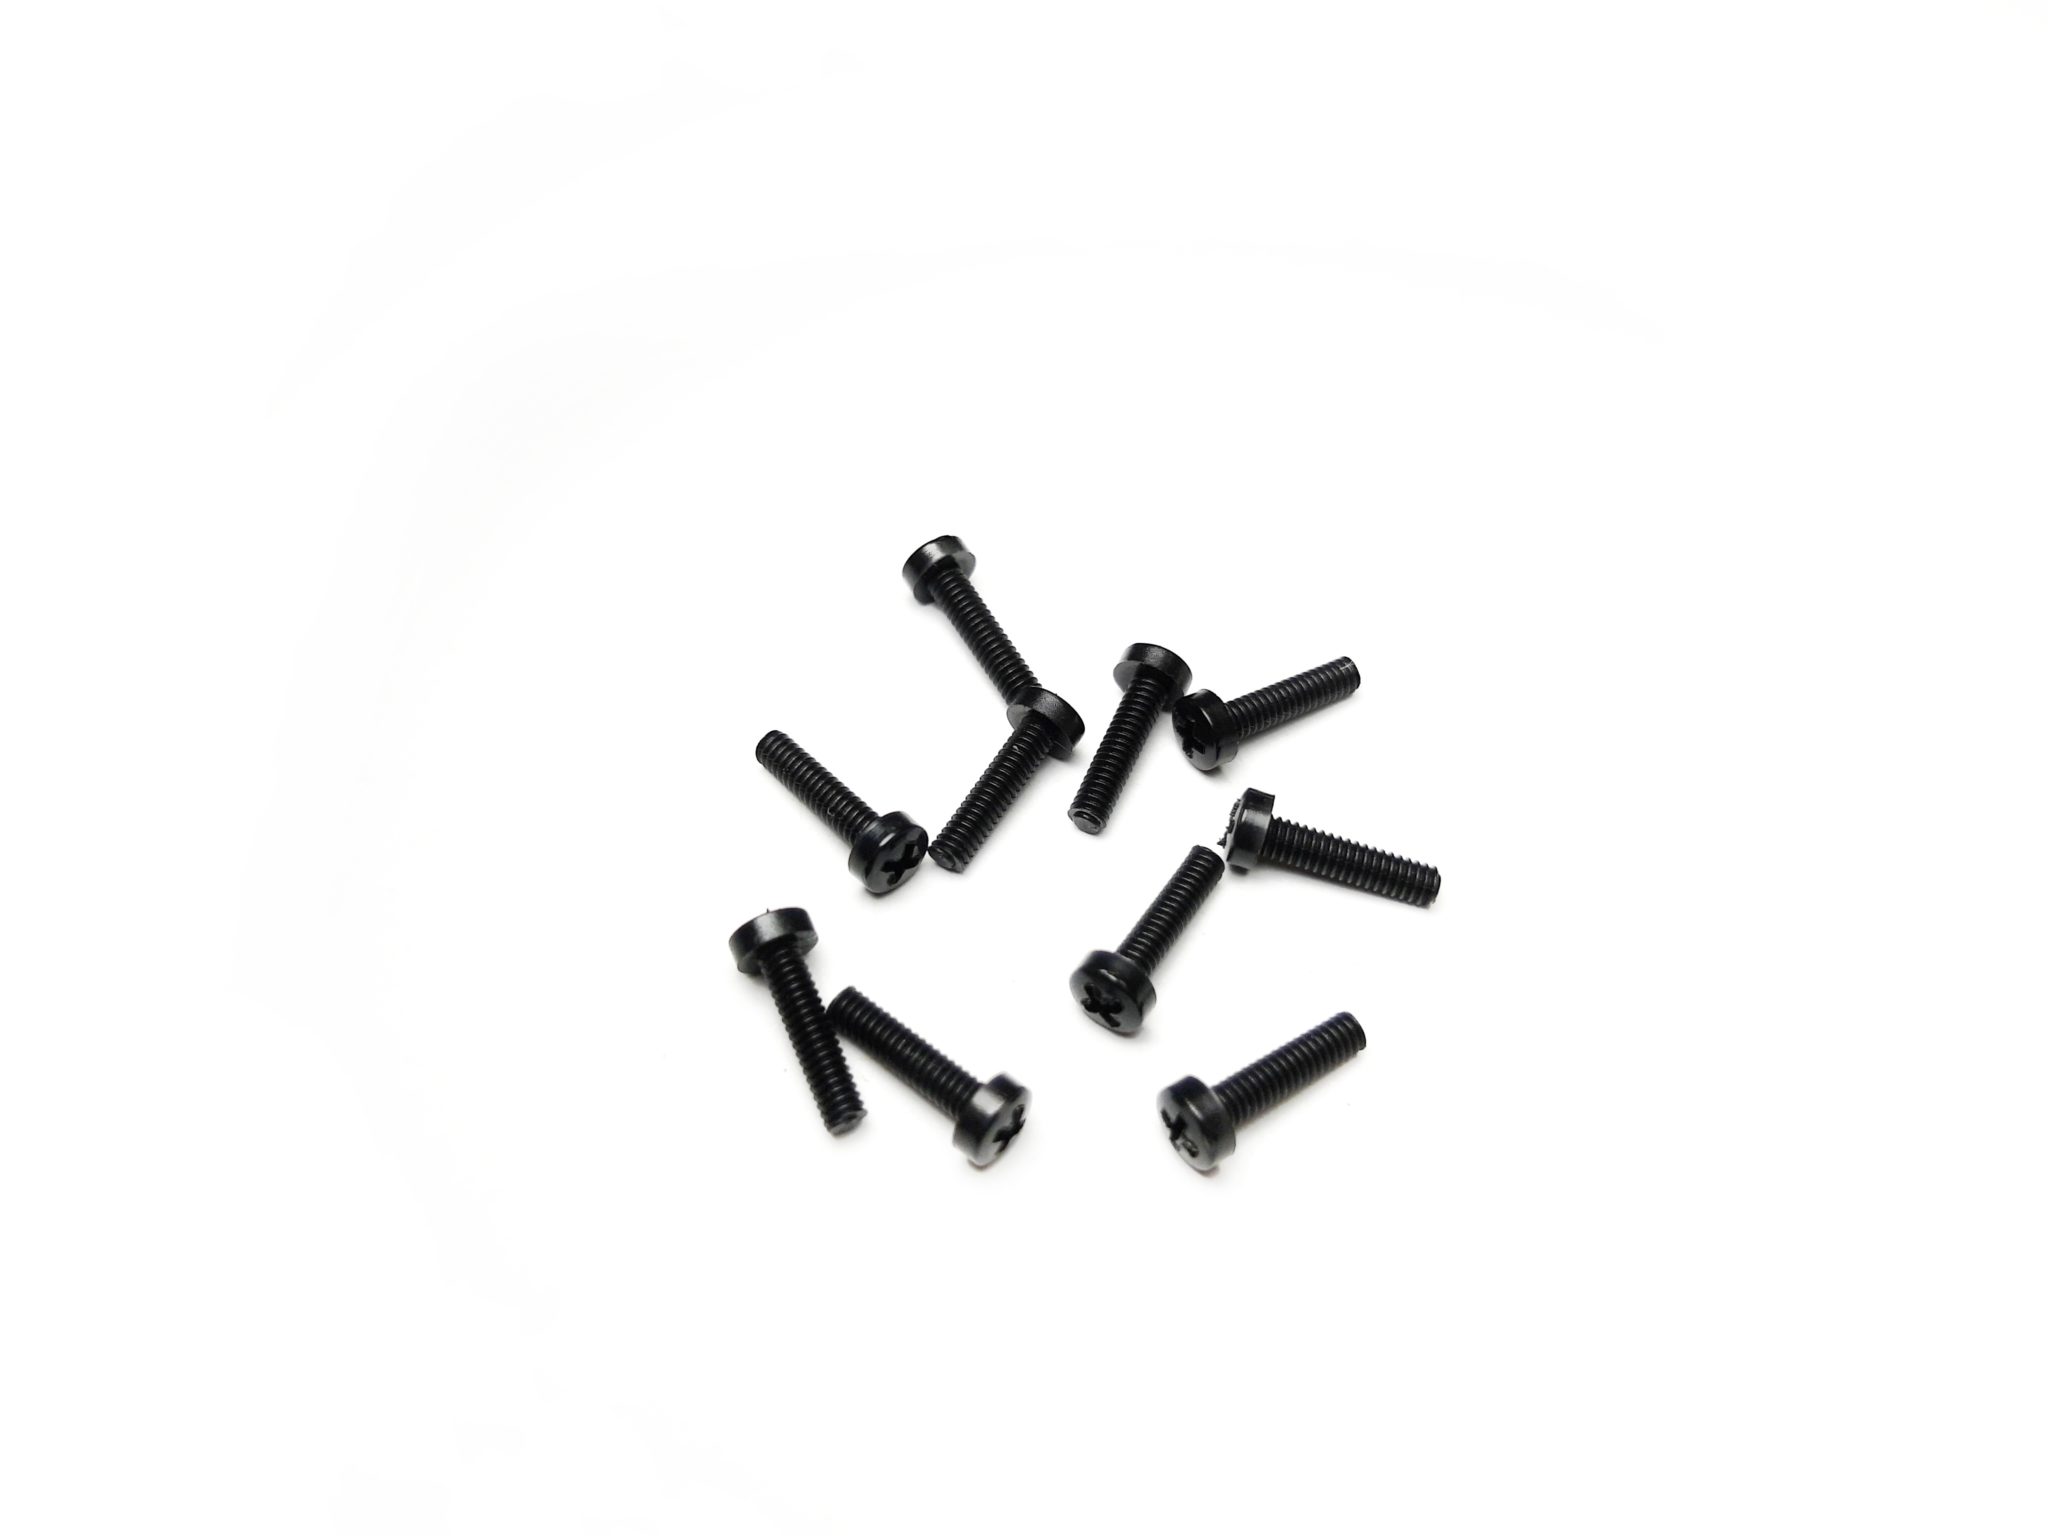 10pcs of 8mm M2 Black Nylon Screws